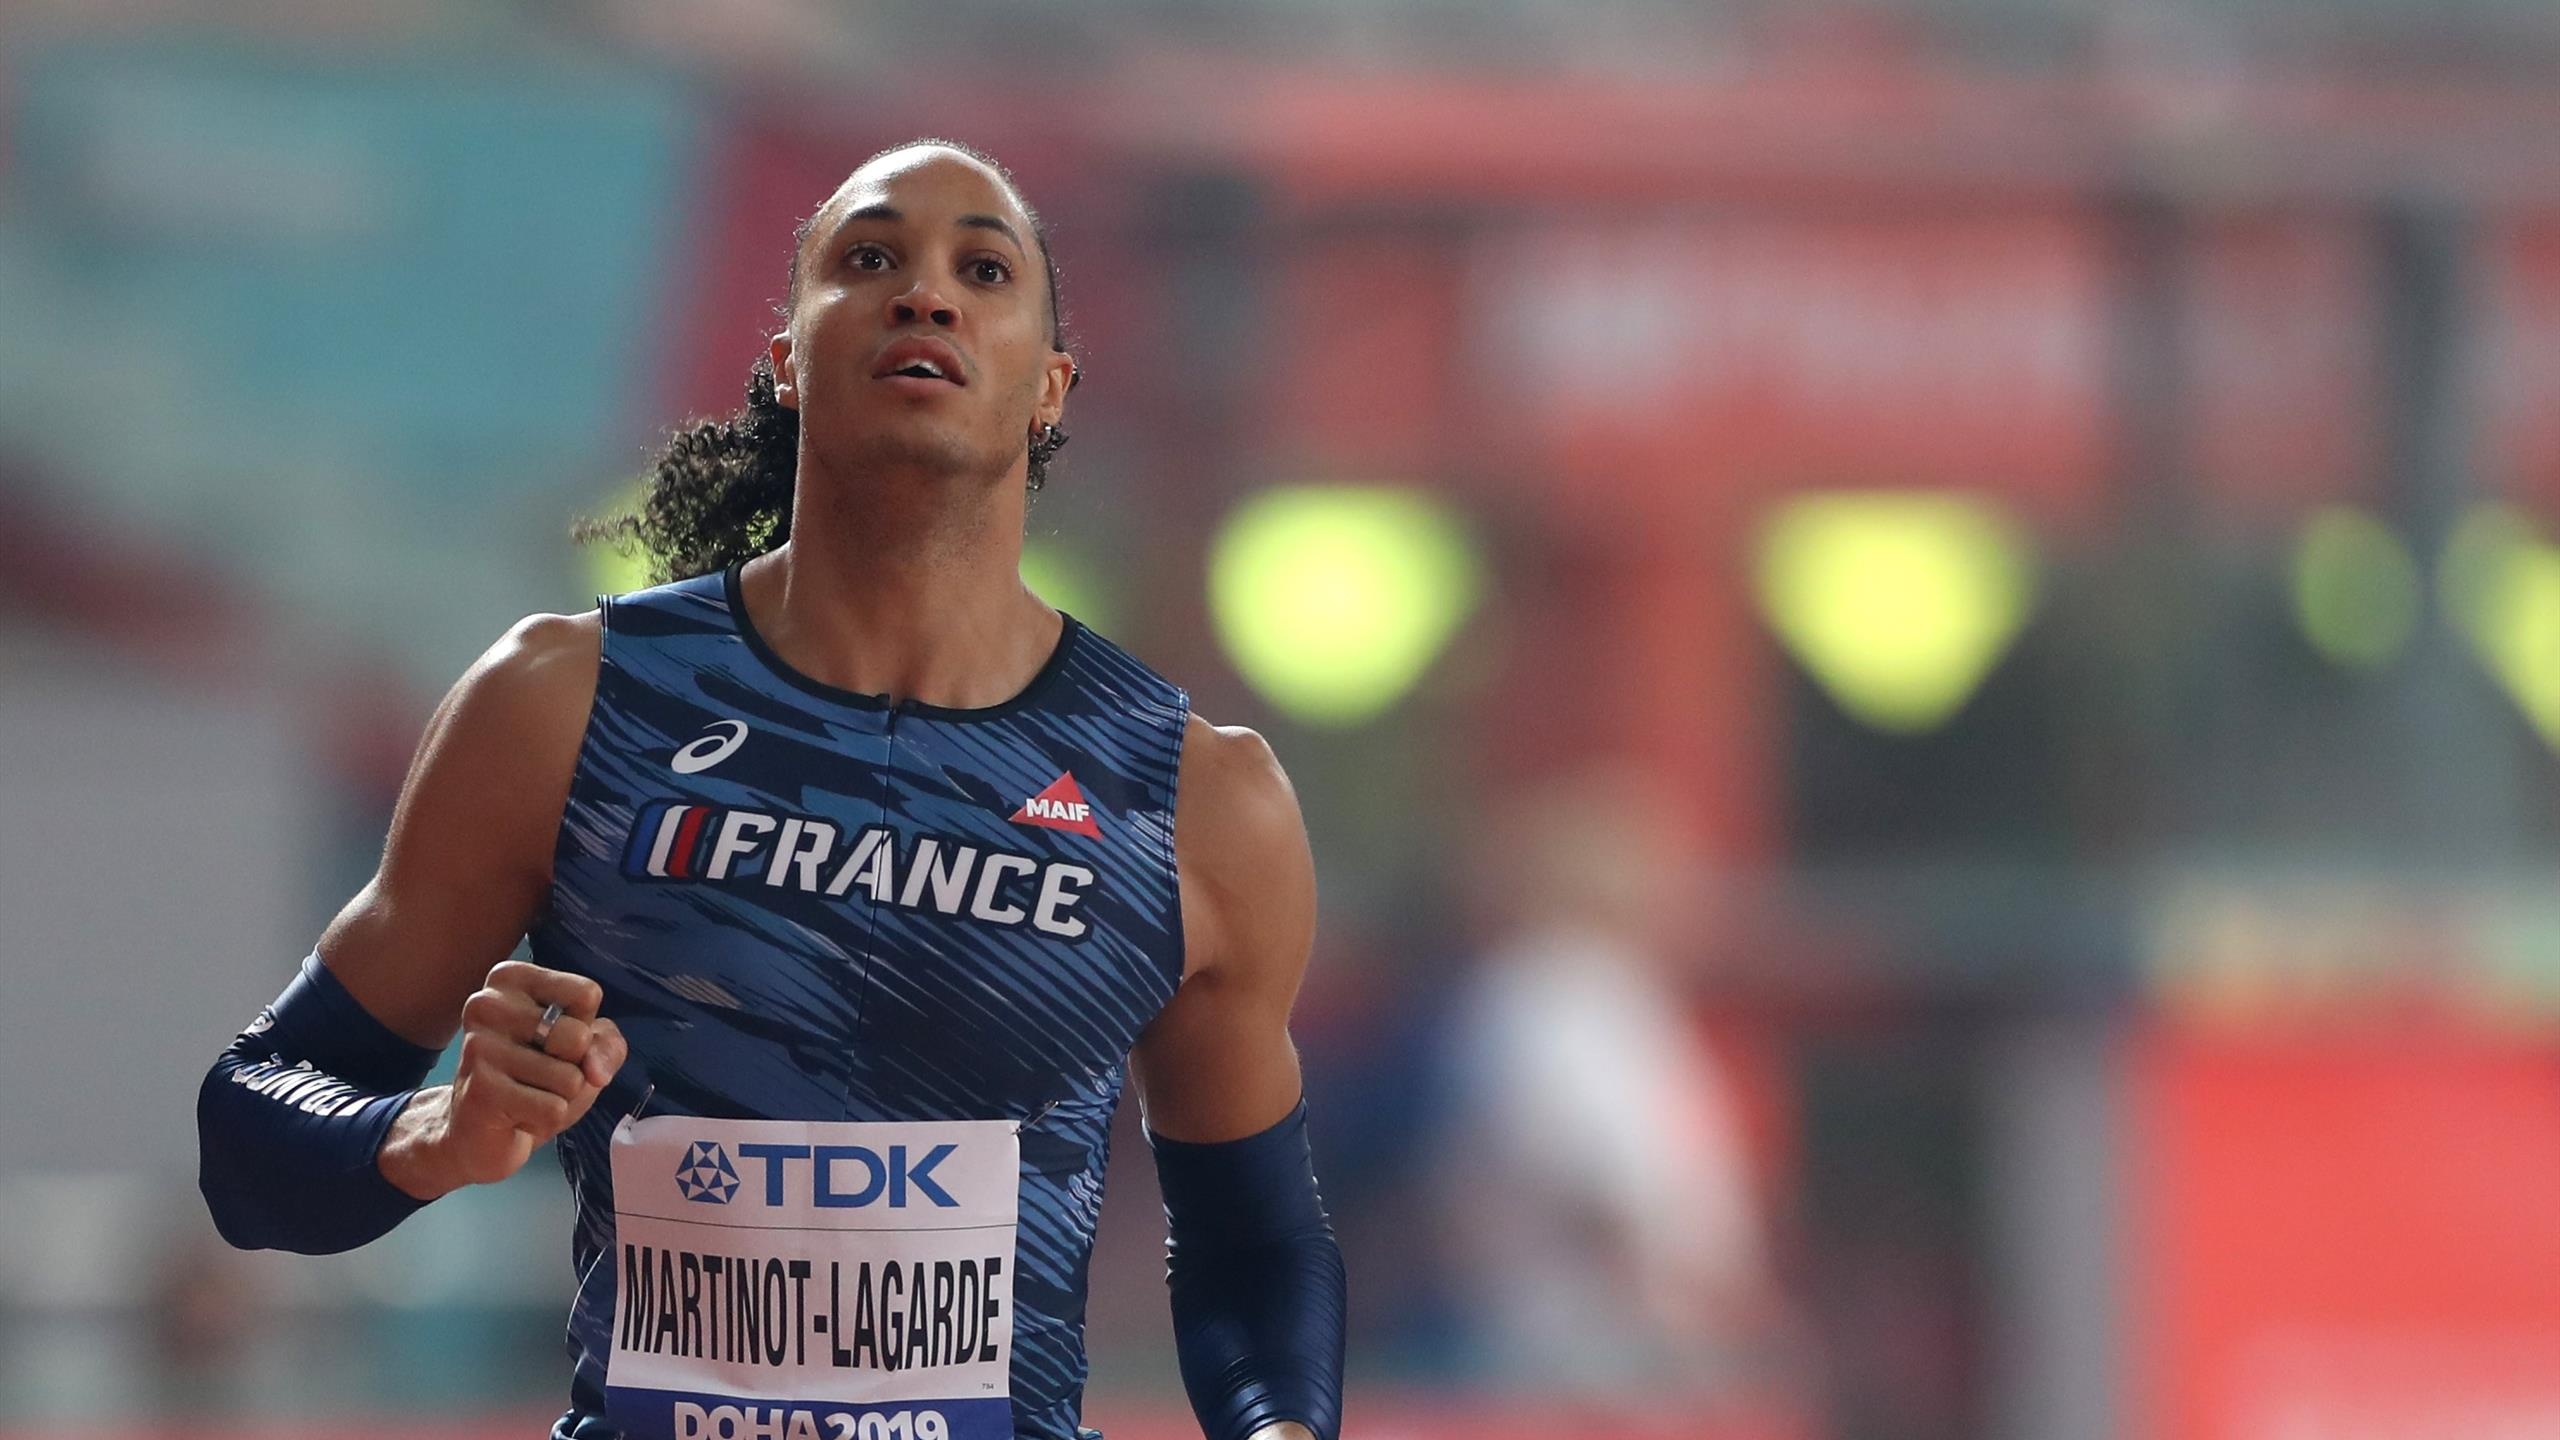 Pascal Martinot-Lagarde, Indoor athletics championships, Injury withdrawal, Eurosport report, 2560x1440 HD Desktop